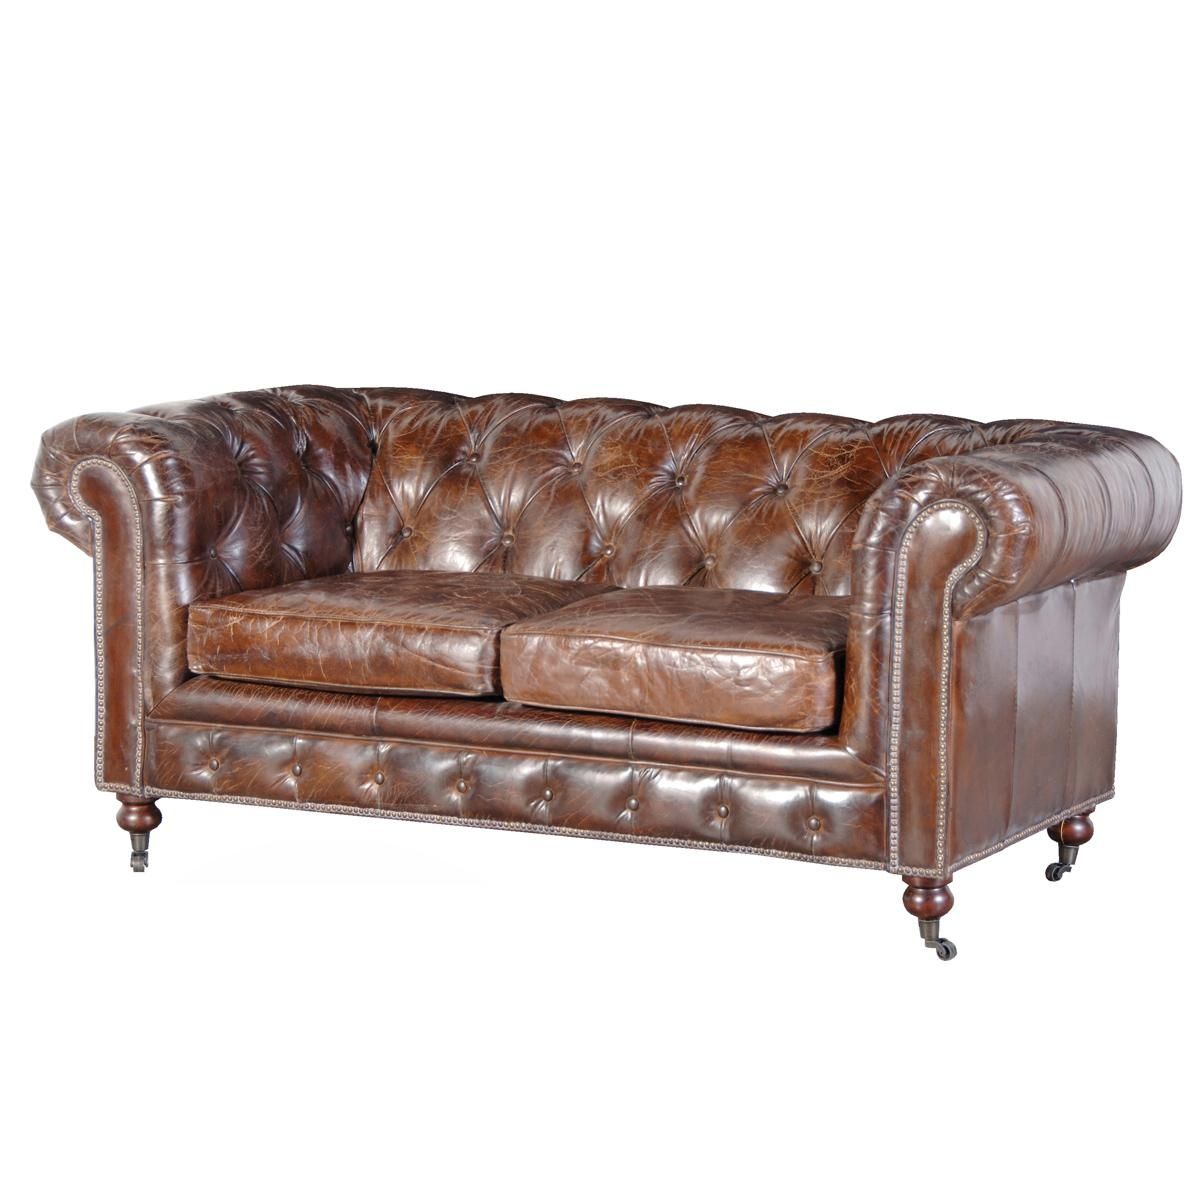 Craigslist Leather Sofa Perfectly Lp8 | Umpsa 78 Sofas With Craigslist Leather Sofa (View 5 of 20)